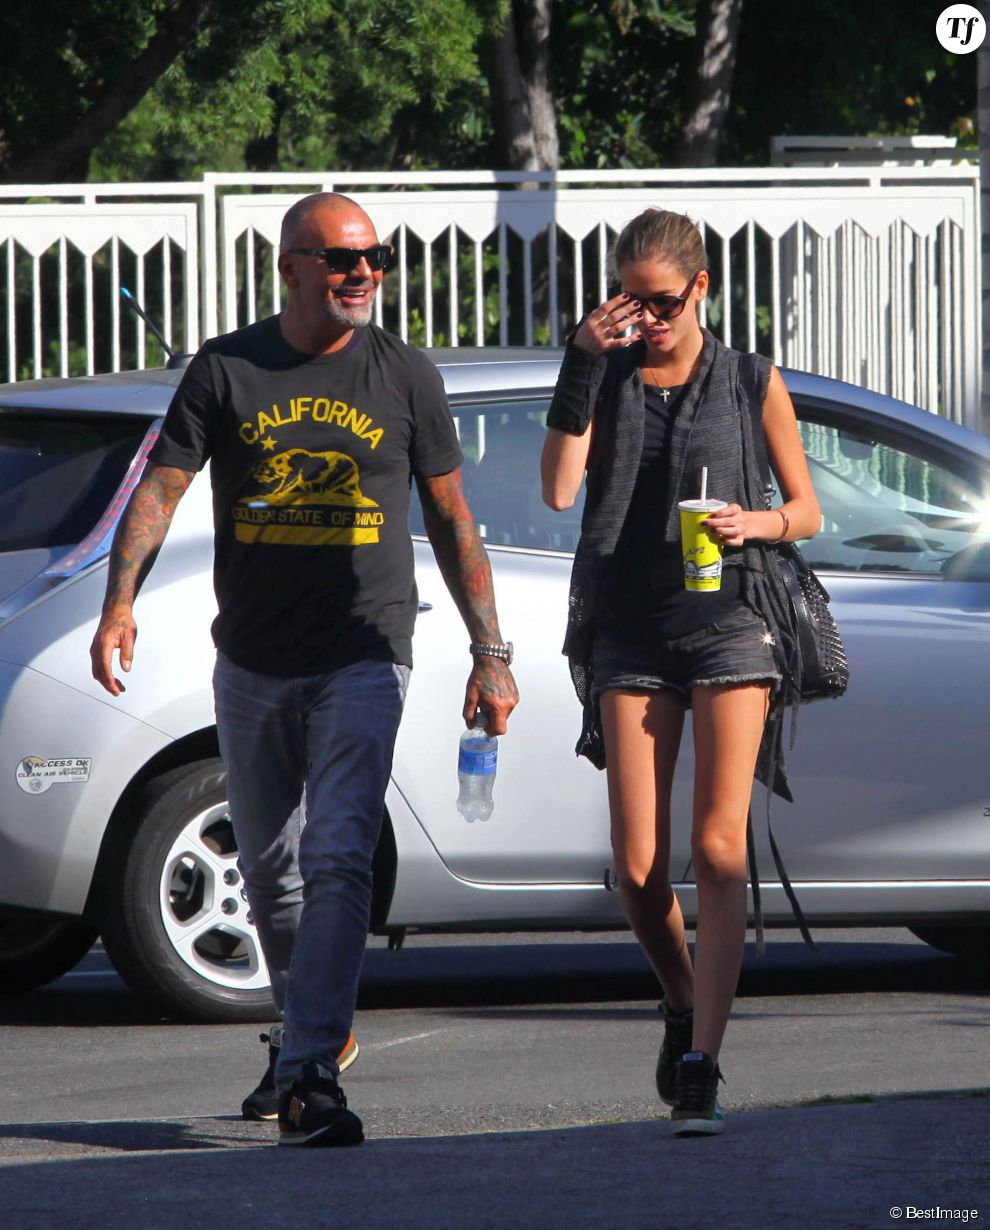 Christian Audigier et Nathalie Sorensen à West Hollywood en juin 2013